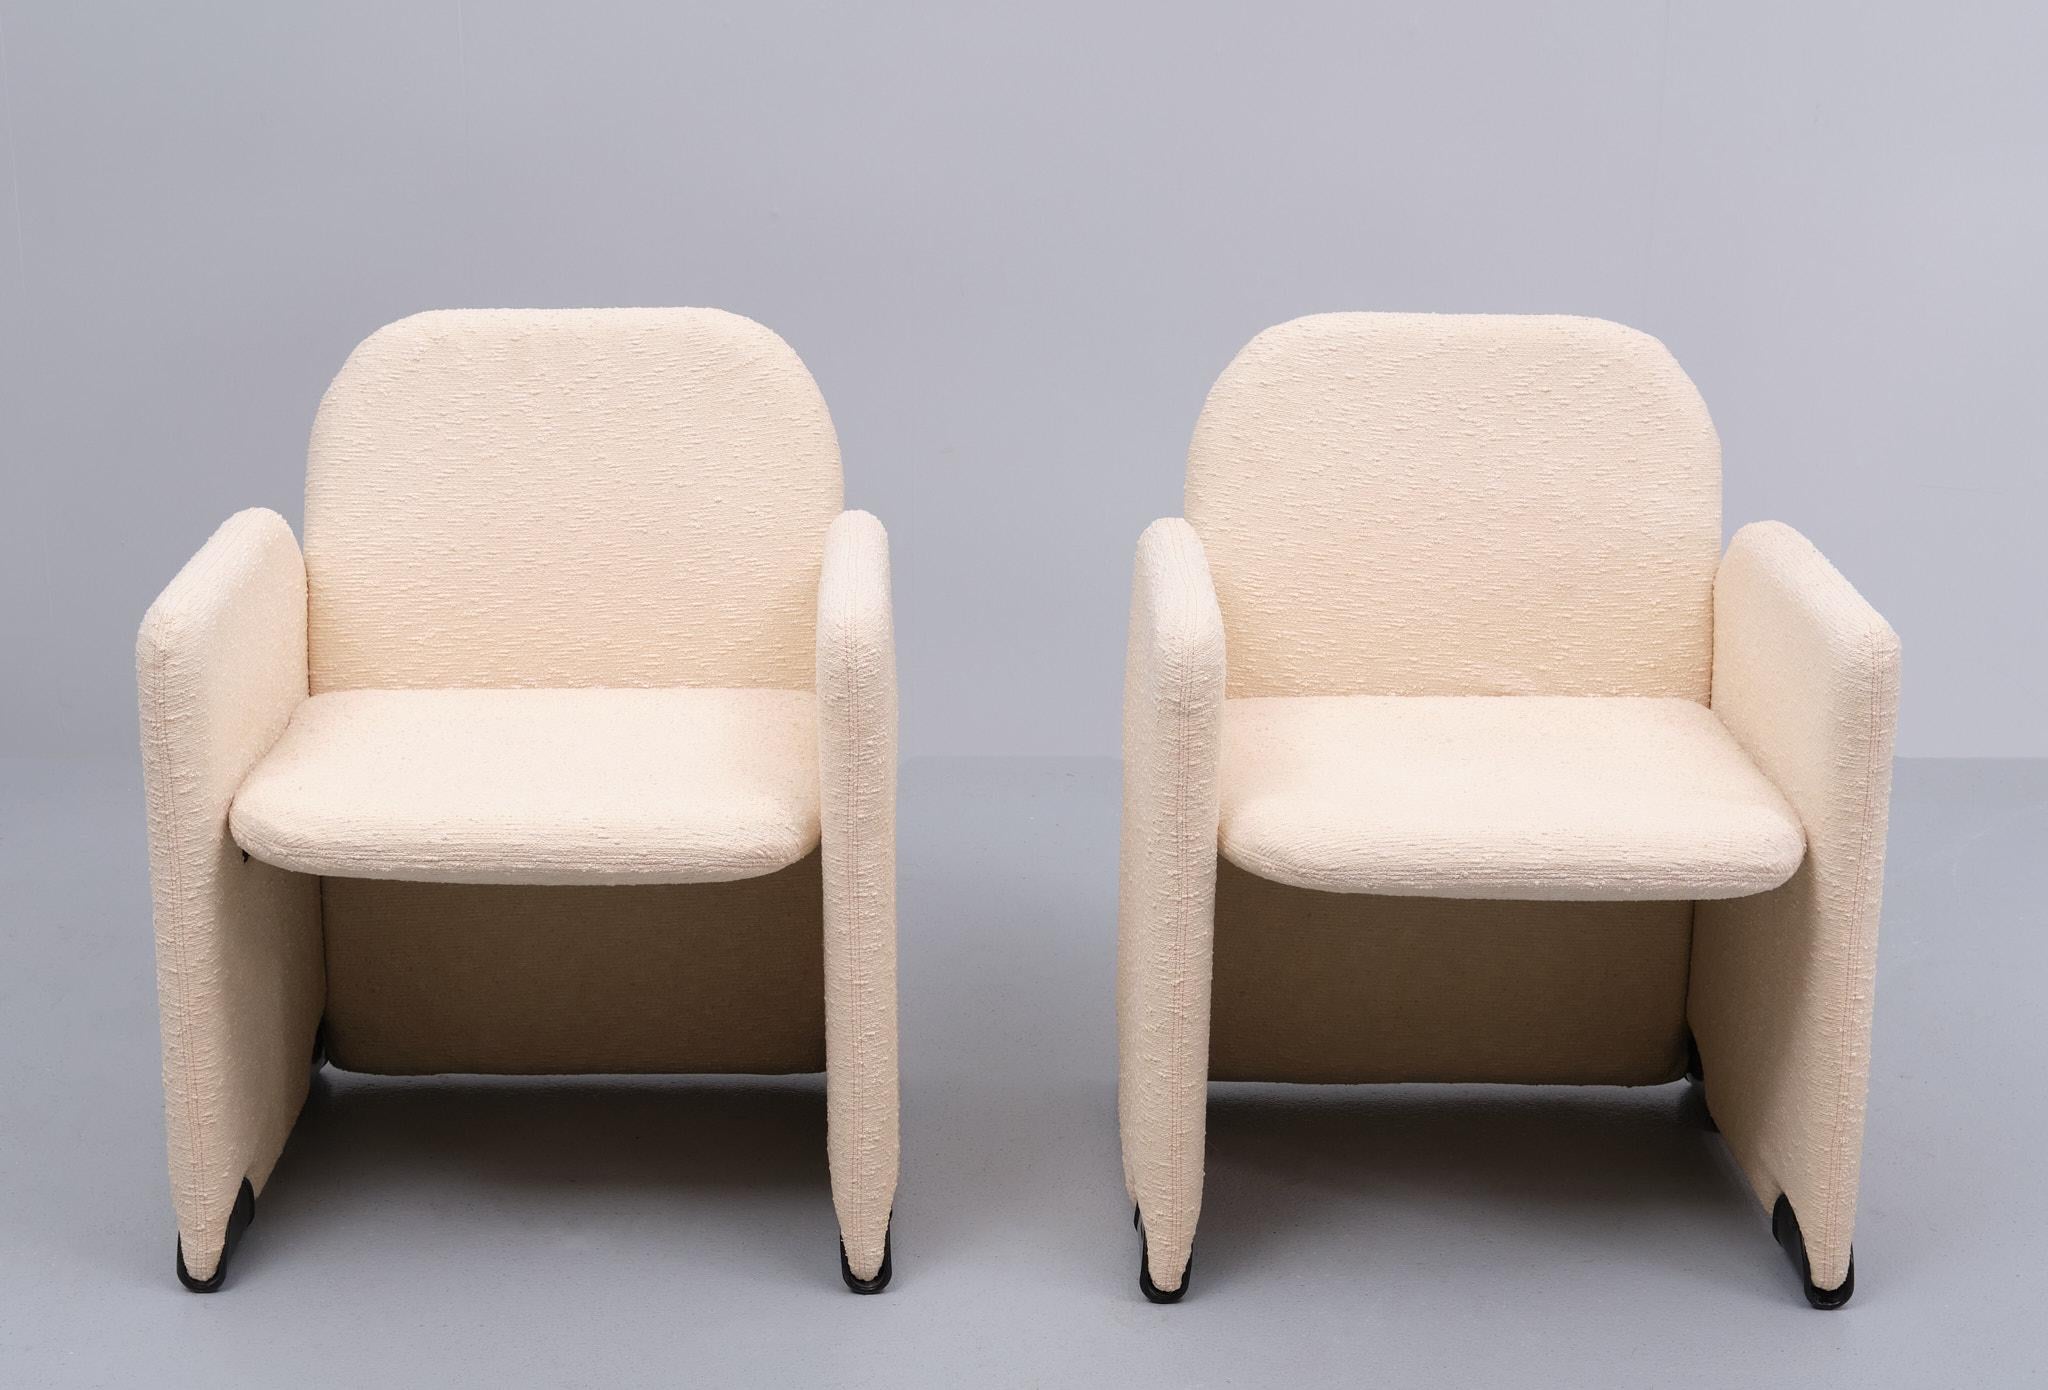 Late 20th Century Vintage Italian Lounge Chair s Designed Ammannati & Vitelli for Brunati  1970s  For Sale